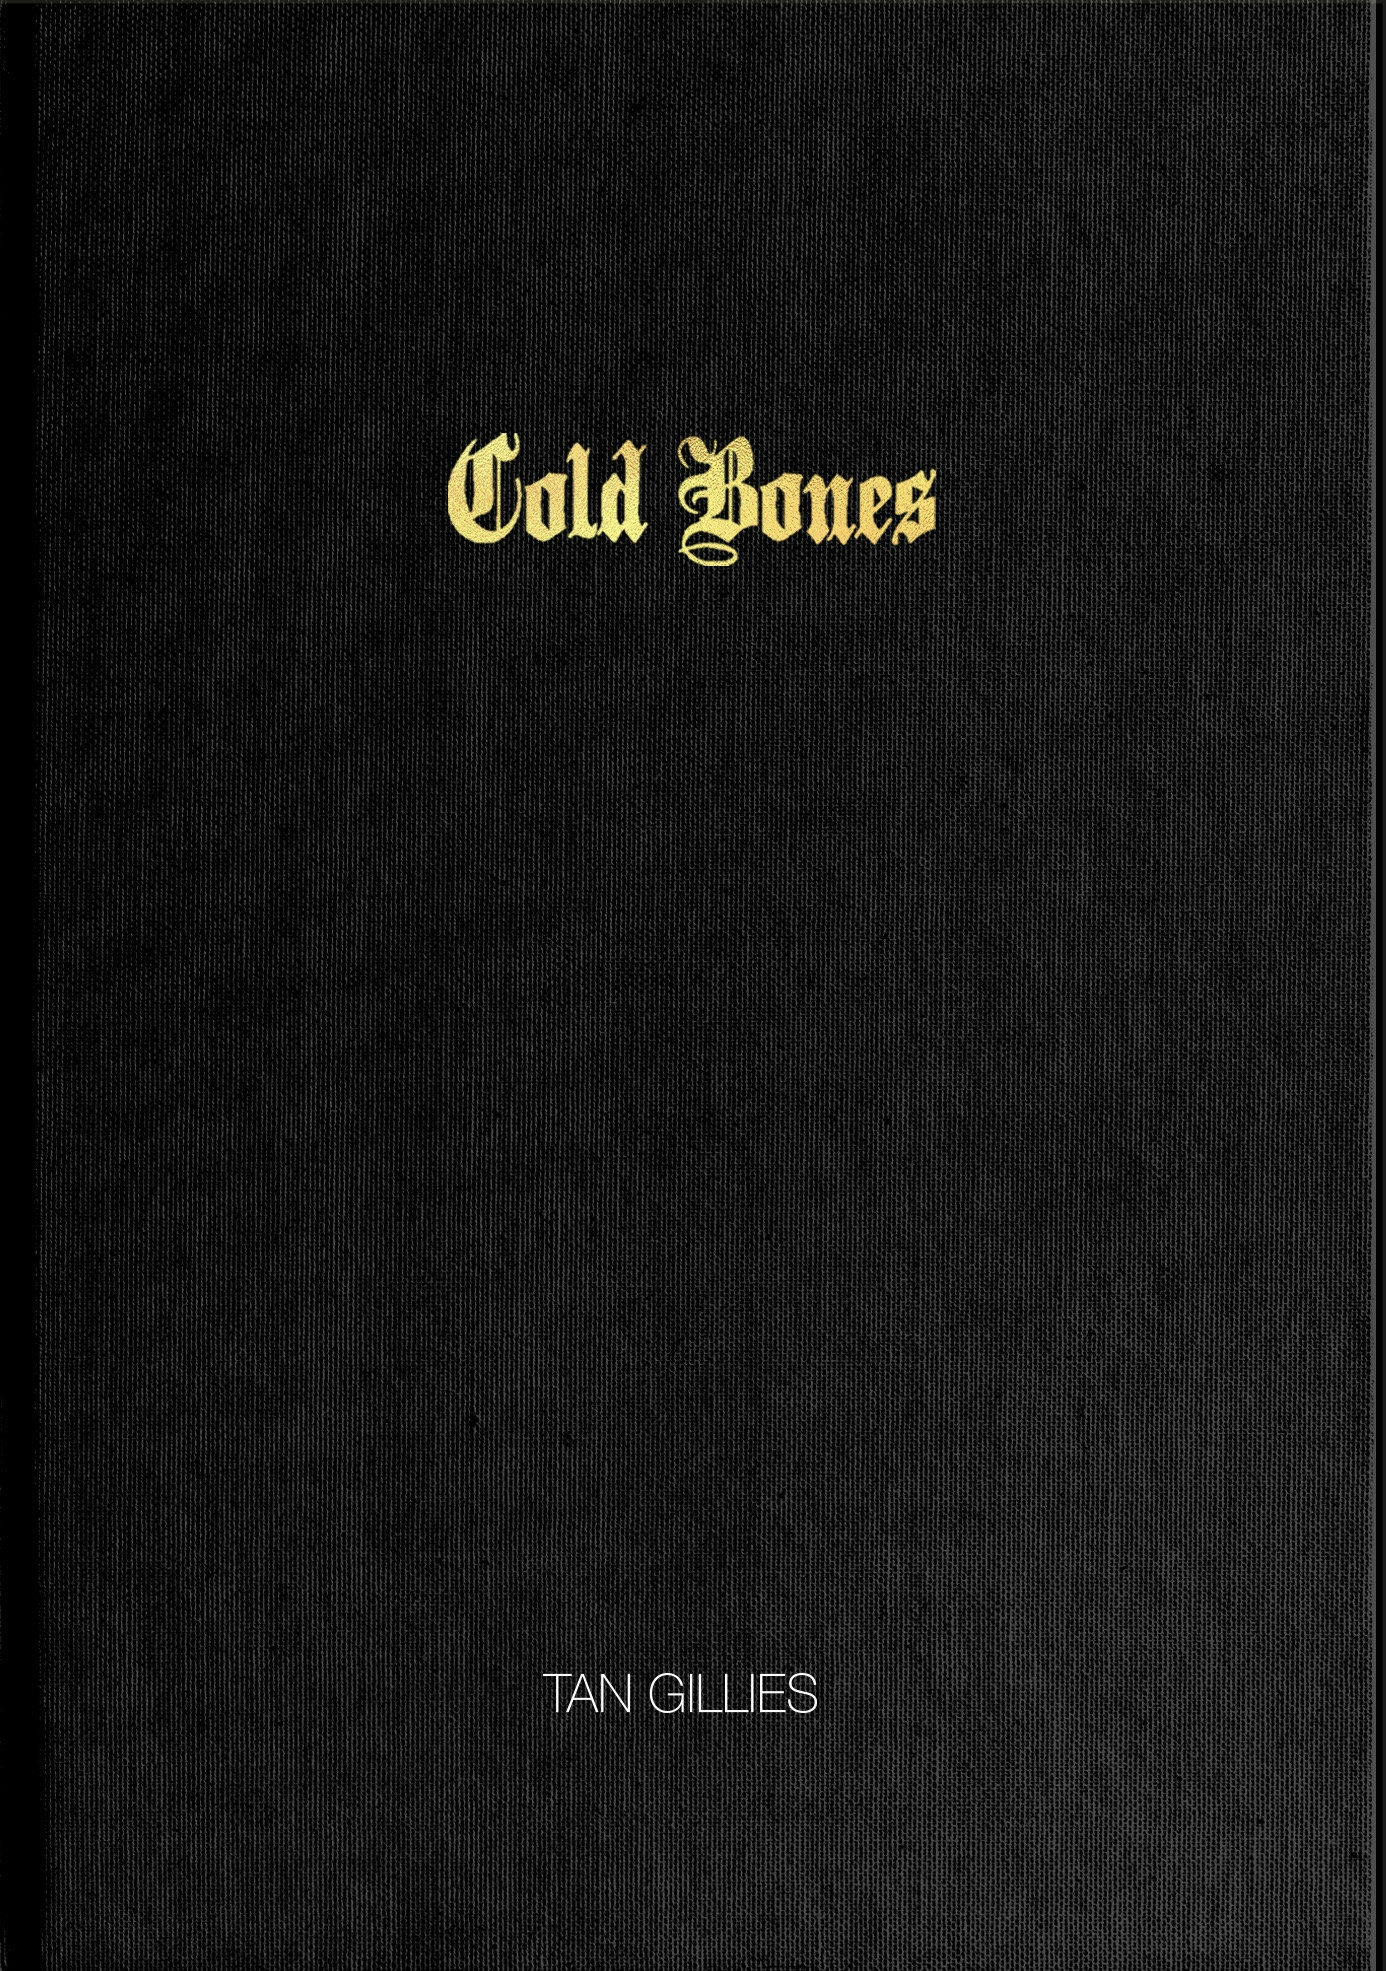 Album artwork for Cold Bones by Tan Gillies